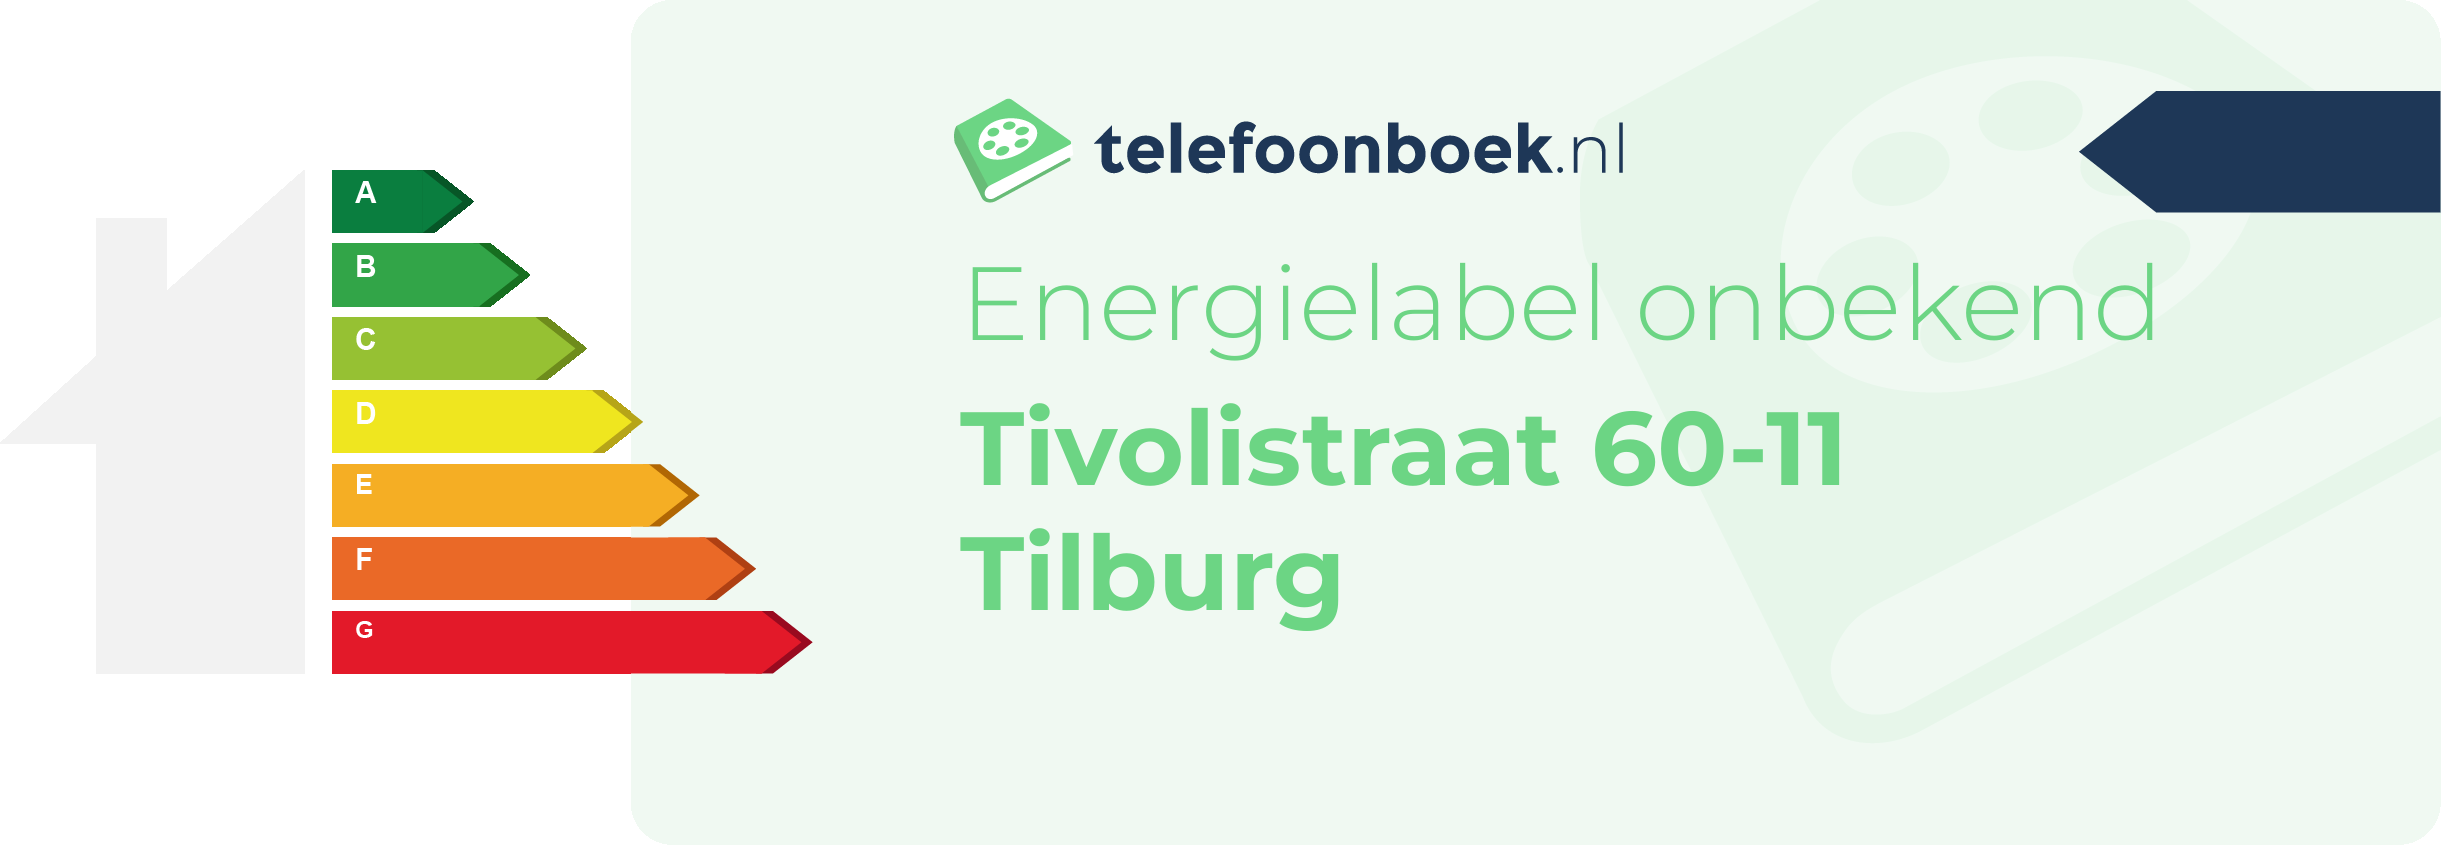 Energielabel Tivolistraat 60-11 Tilburg